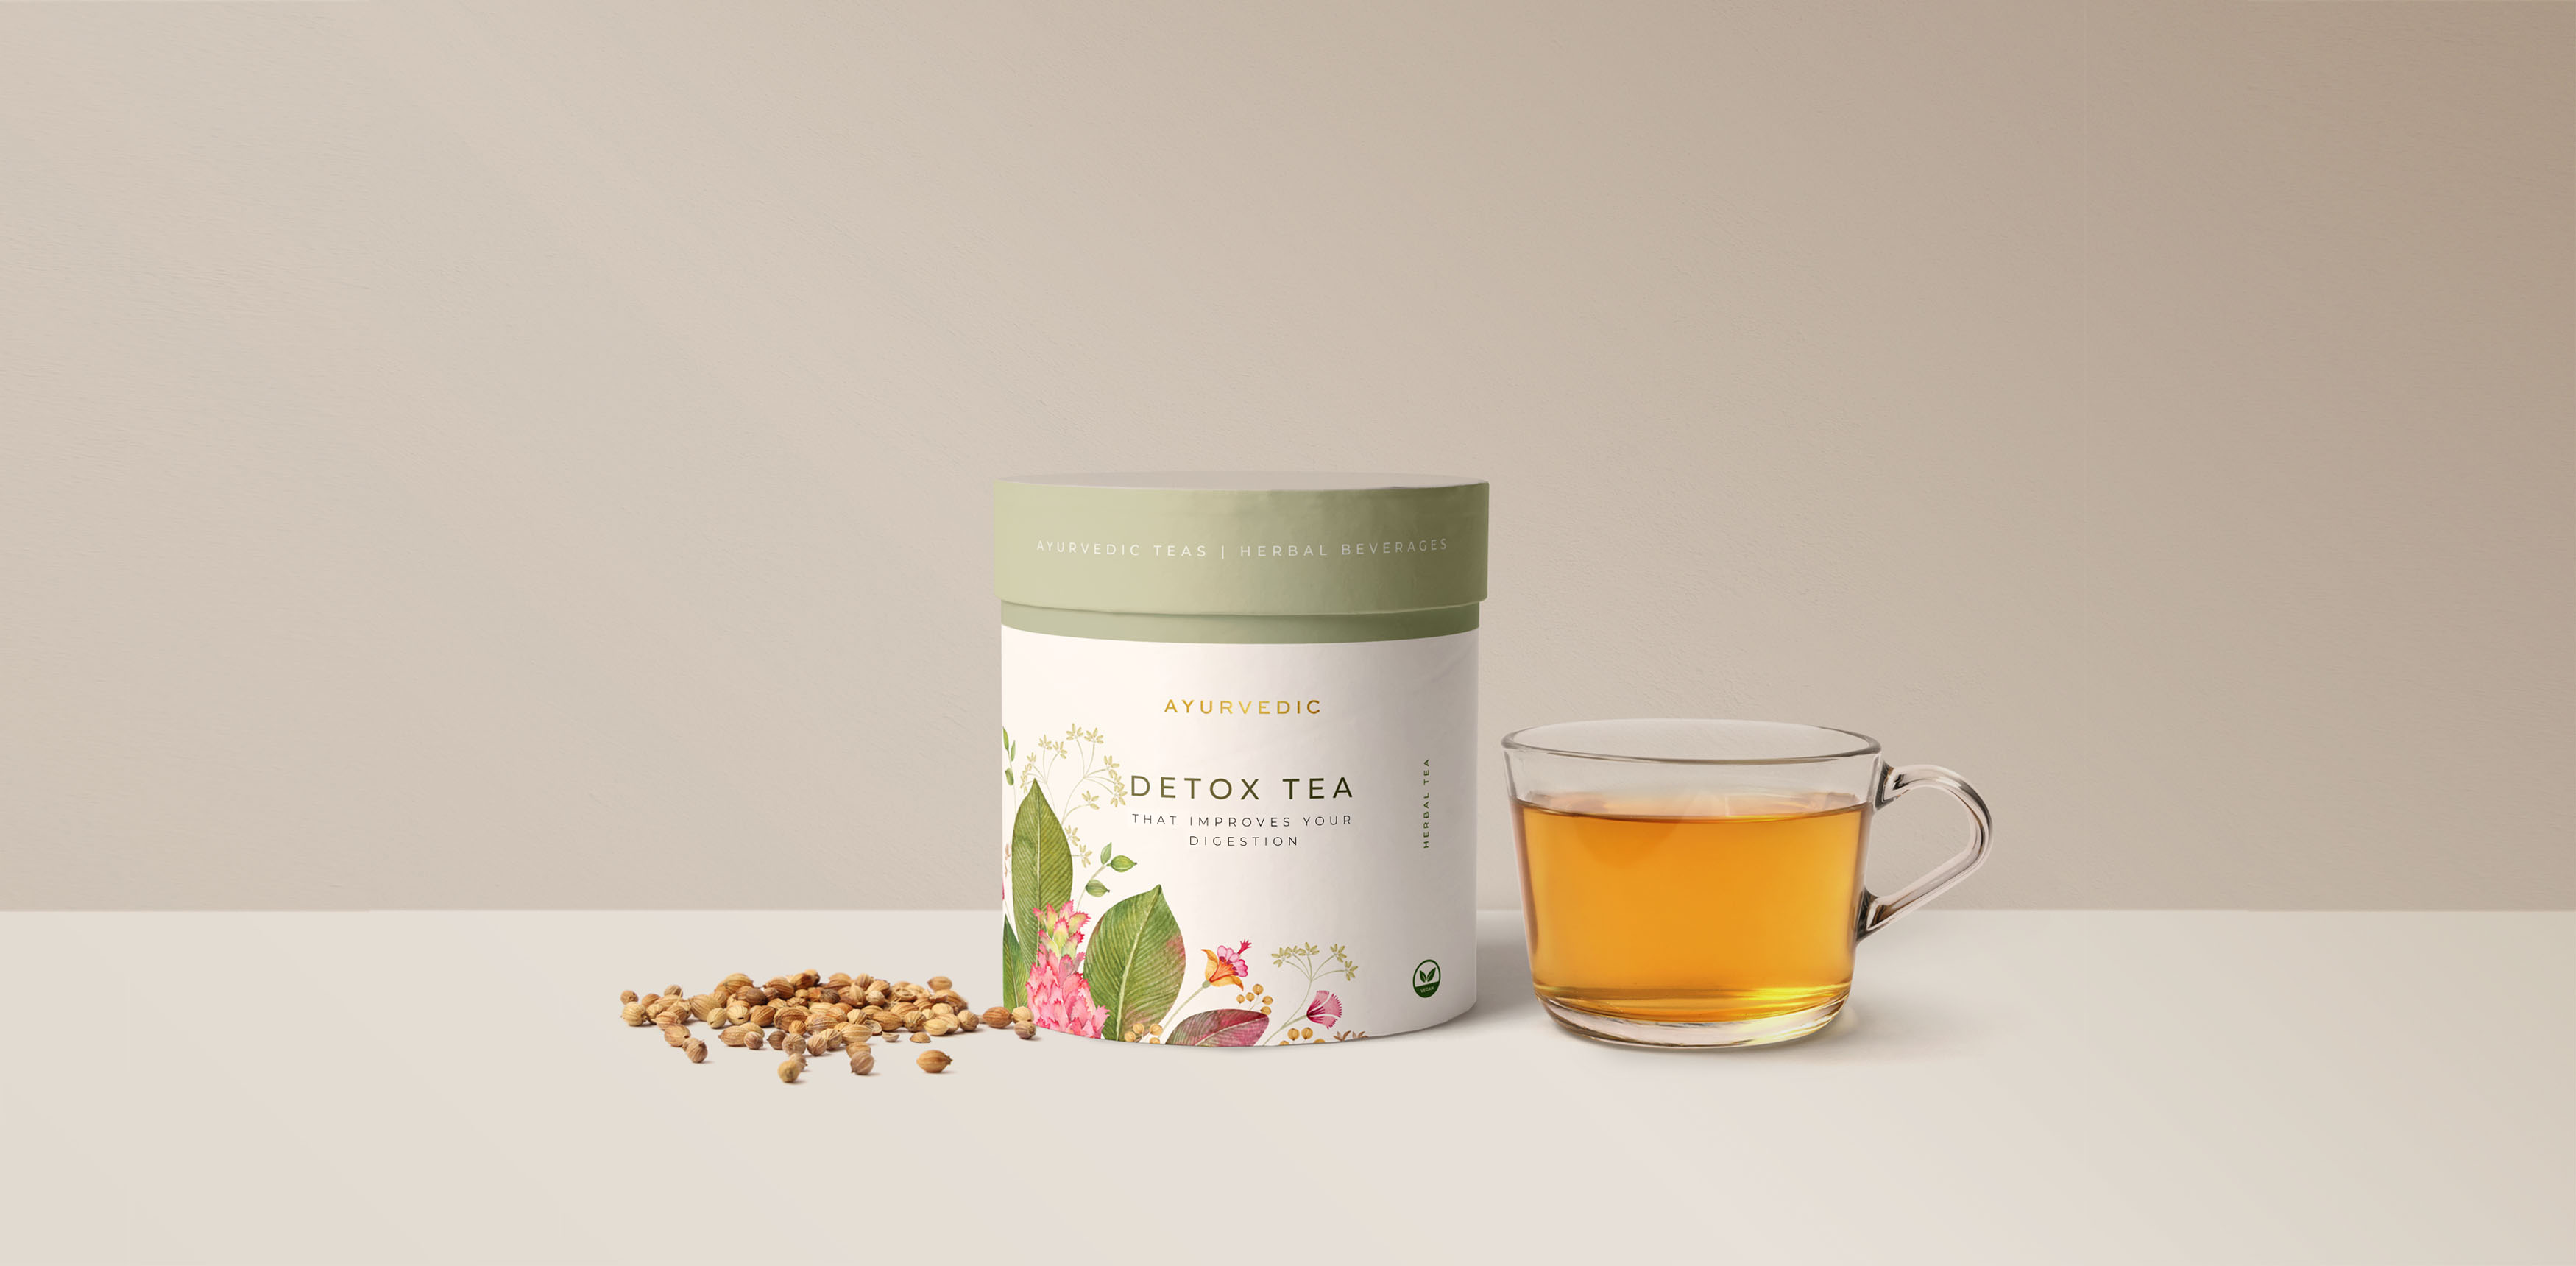 StudioDFlorez Brings Ayurvedic Tradition to Life in Tea Packaging Design